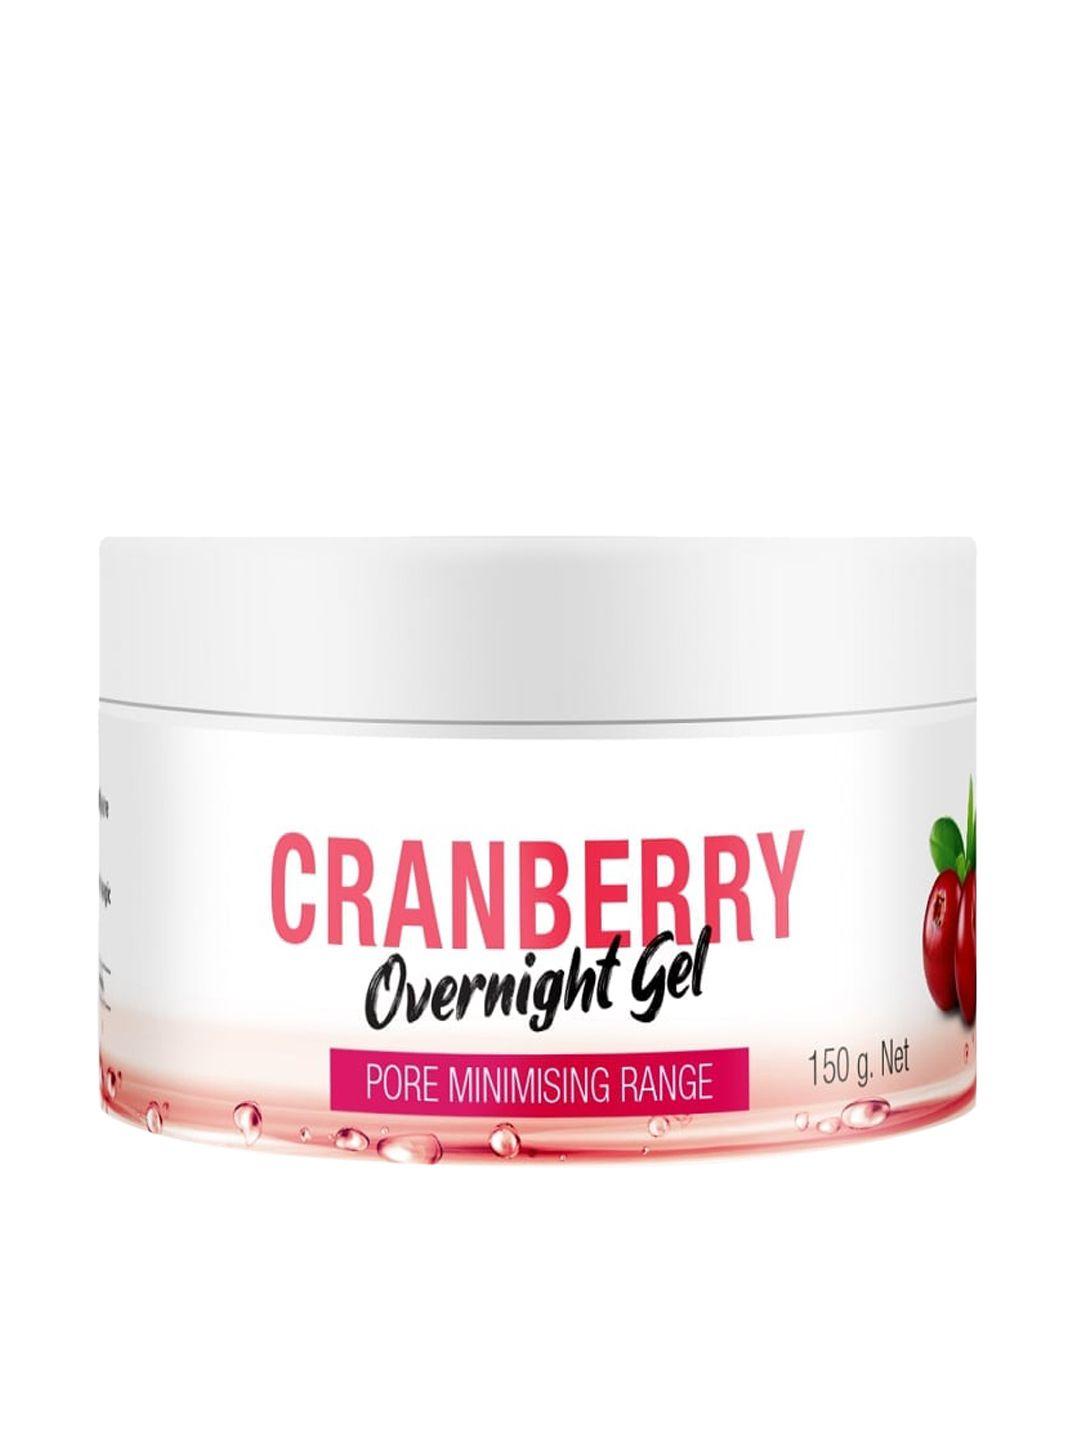 home boutique cranberry pore minimising range overnight gel 150 g